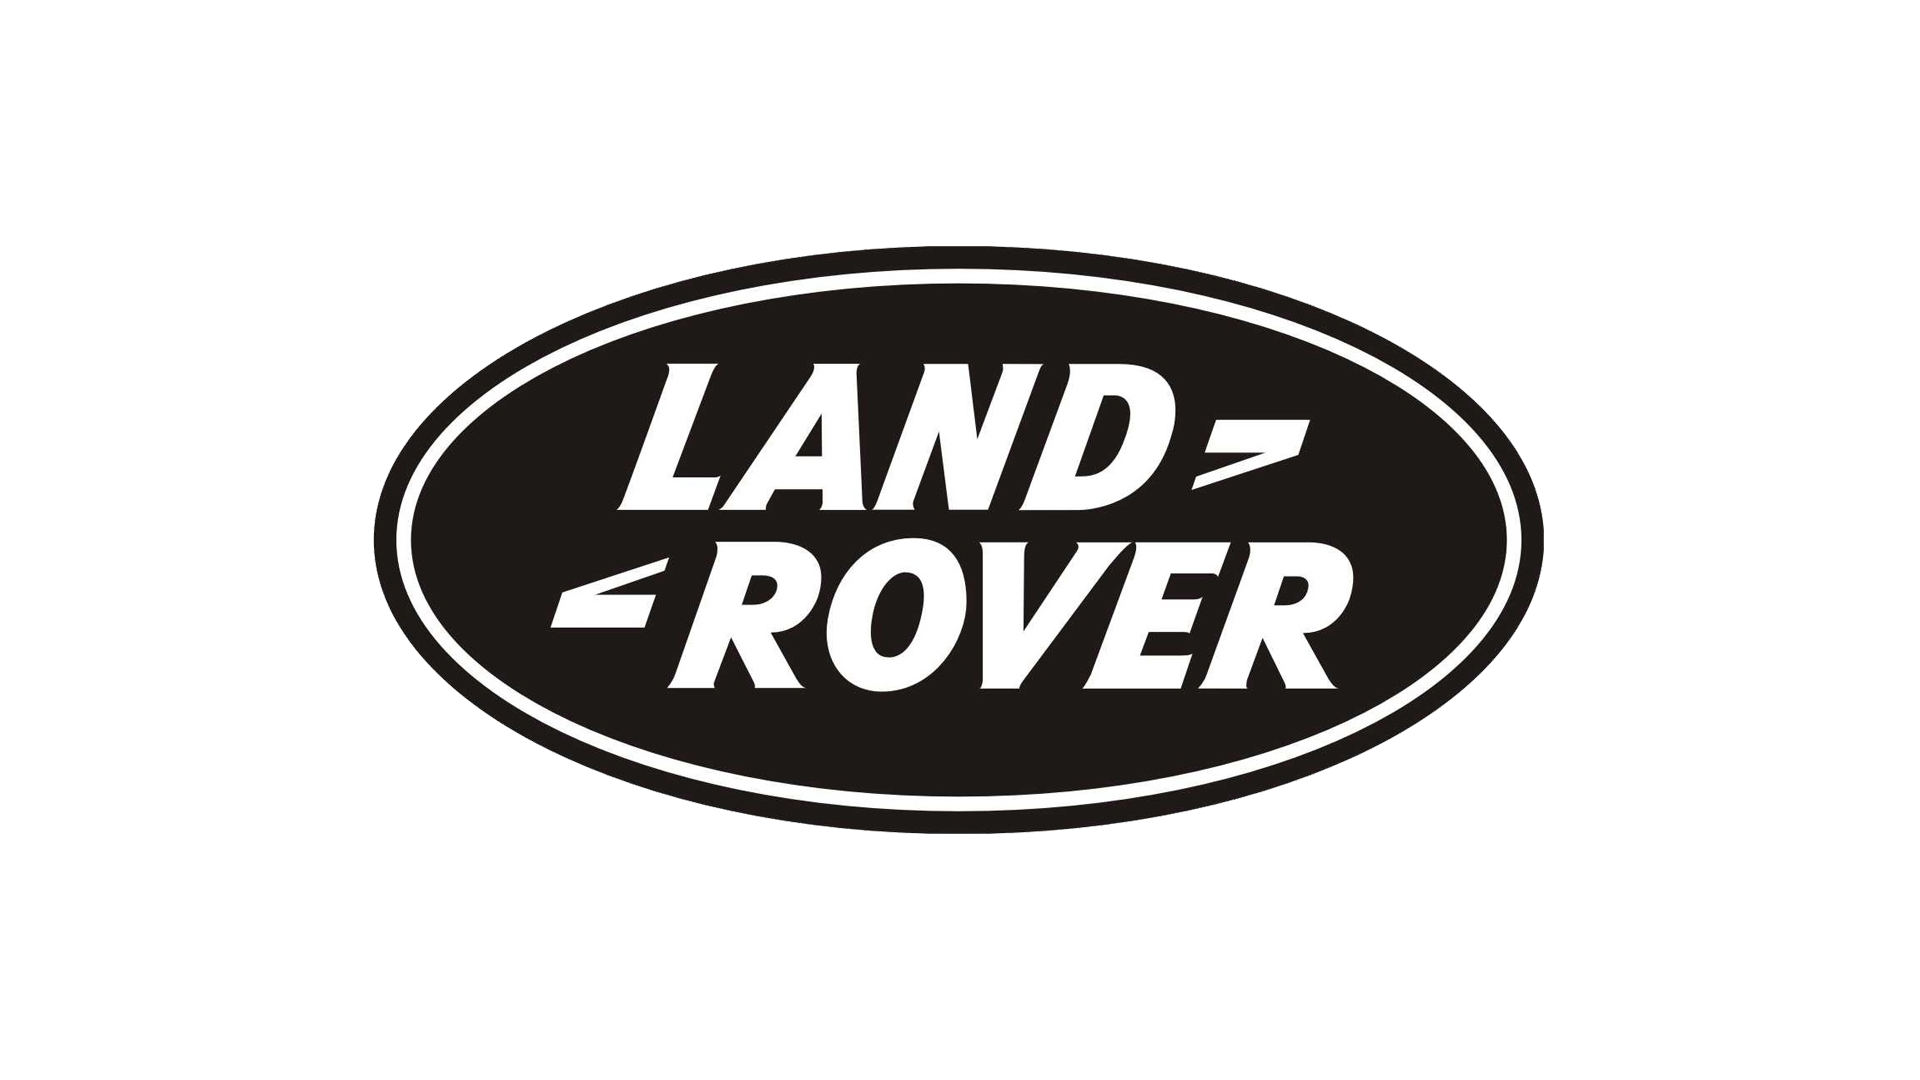 Land-Rover-symbol-black-1920x1080.png